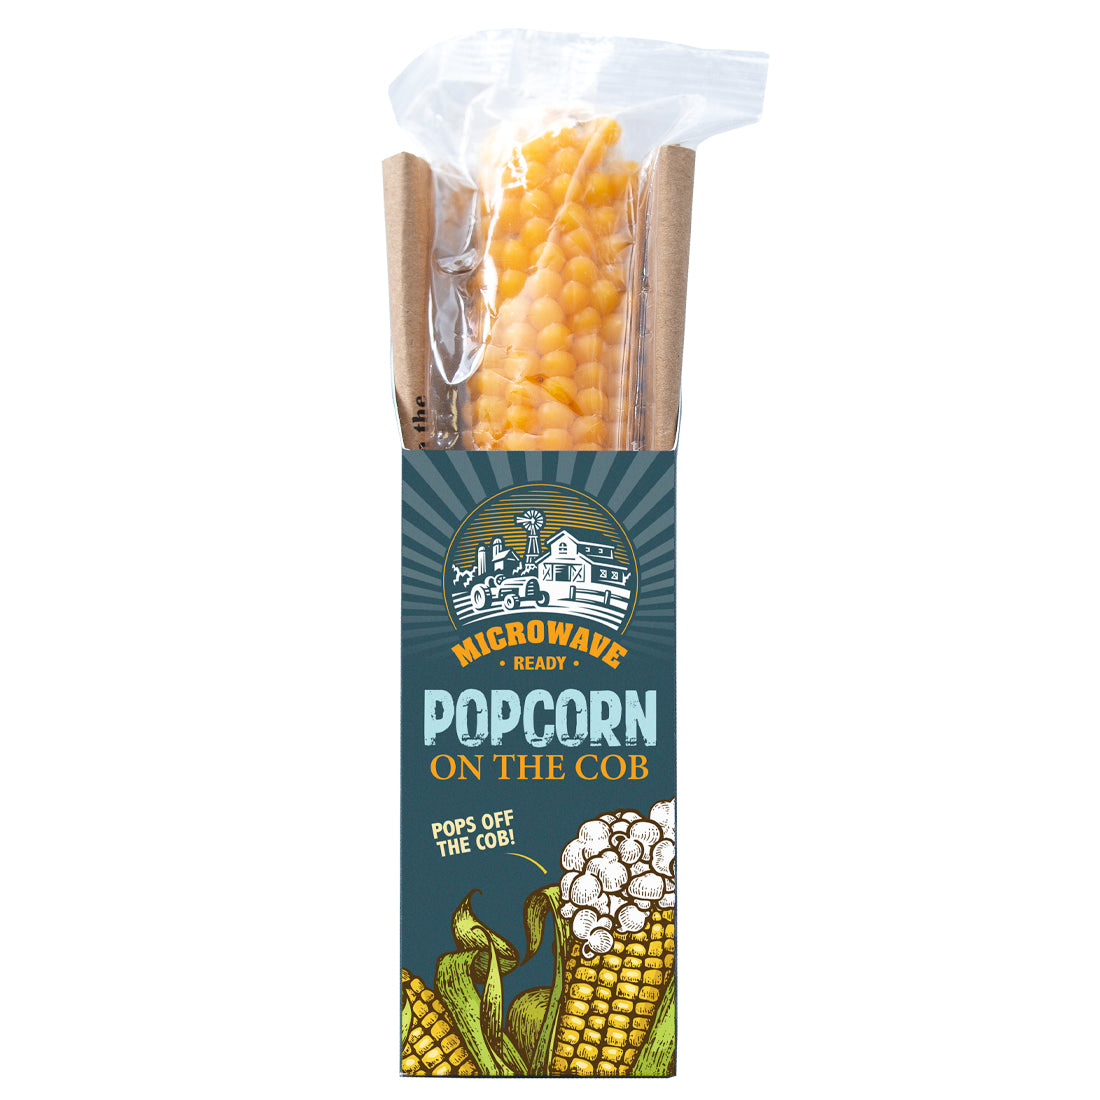 remove popcorn from plastic bag